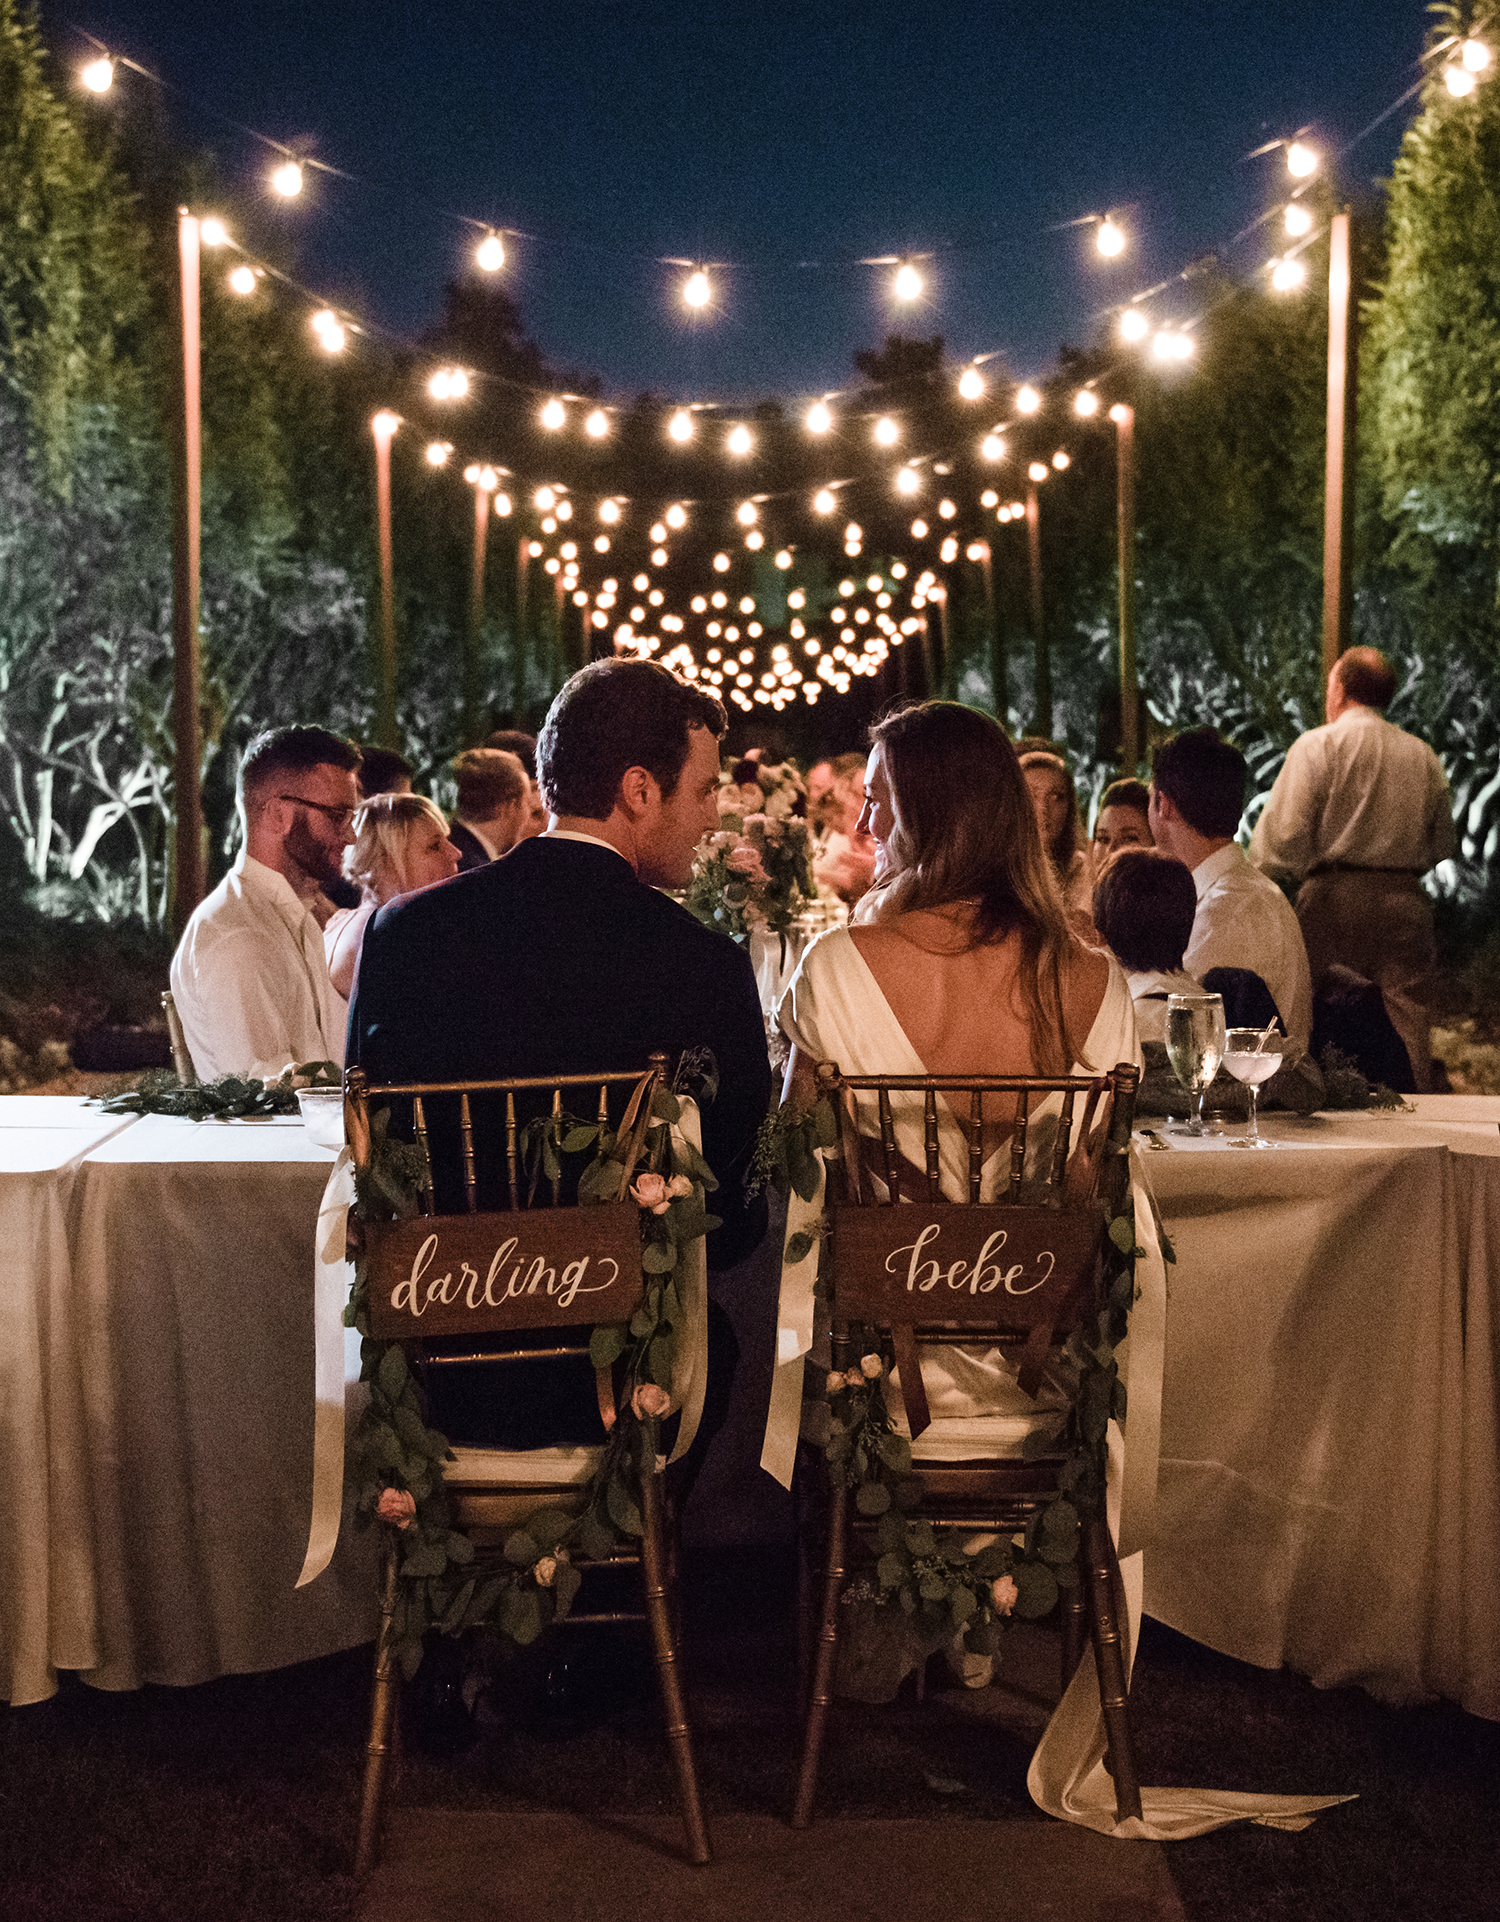 livvyland-blog-olivia-watson-wedding-villa-del-lago-austin-texas-fall-blush-burgundy-classic-romantic-festoon-lighting-farm-table-setting